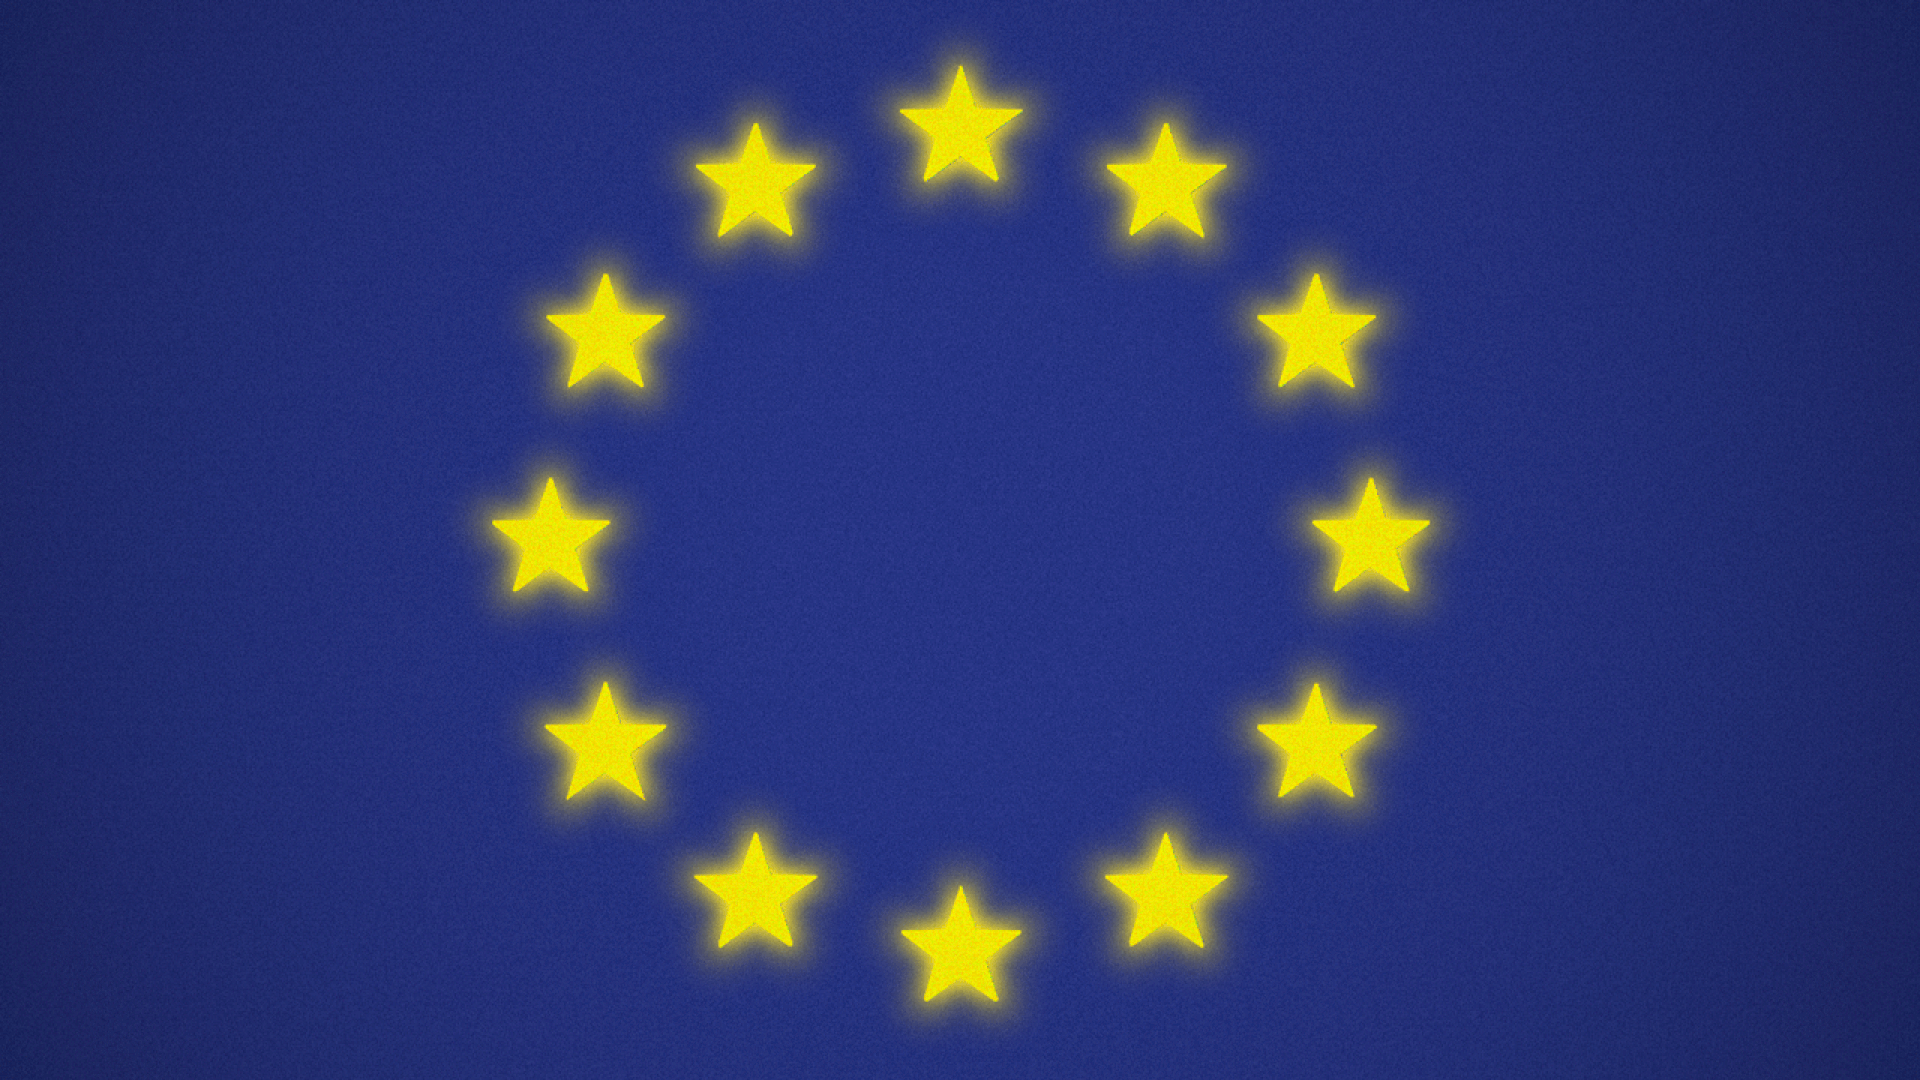 Animated illustration of the EU symbol gradually going dark.